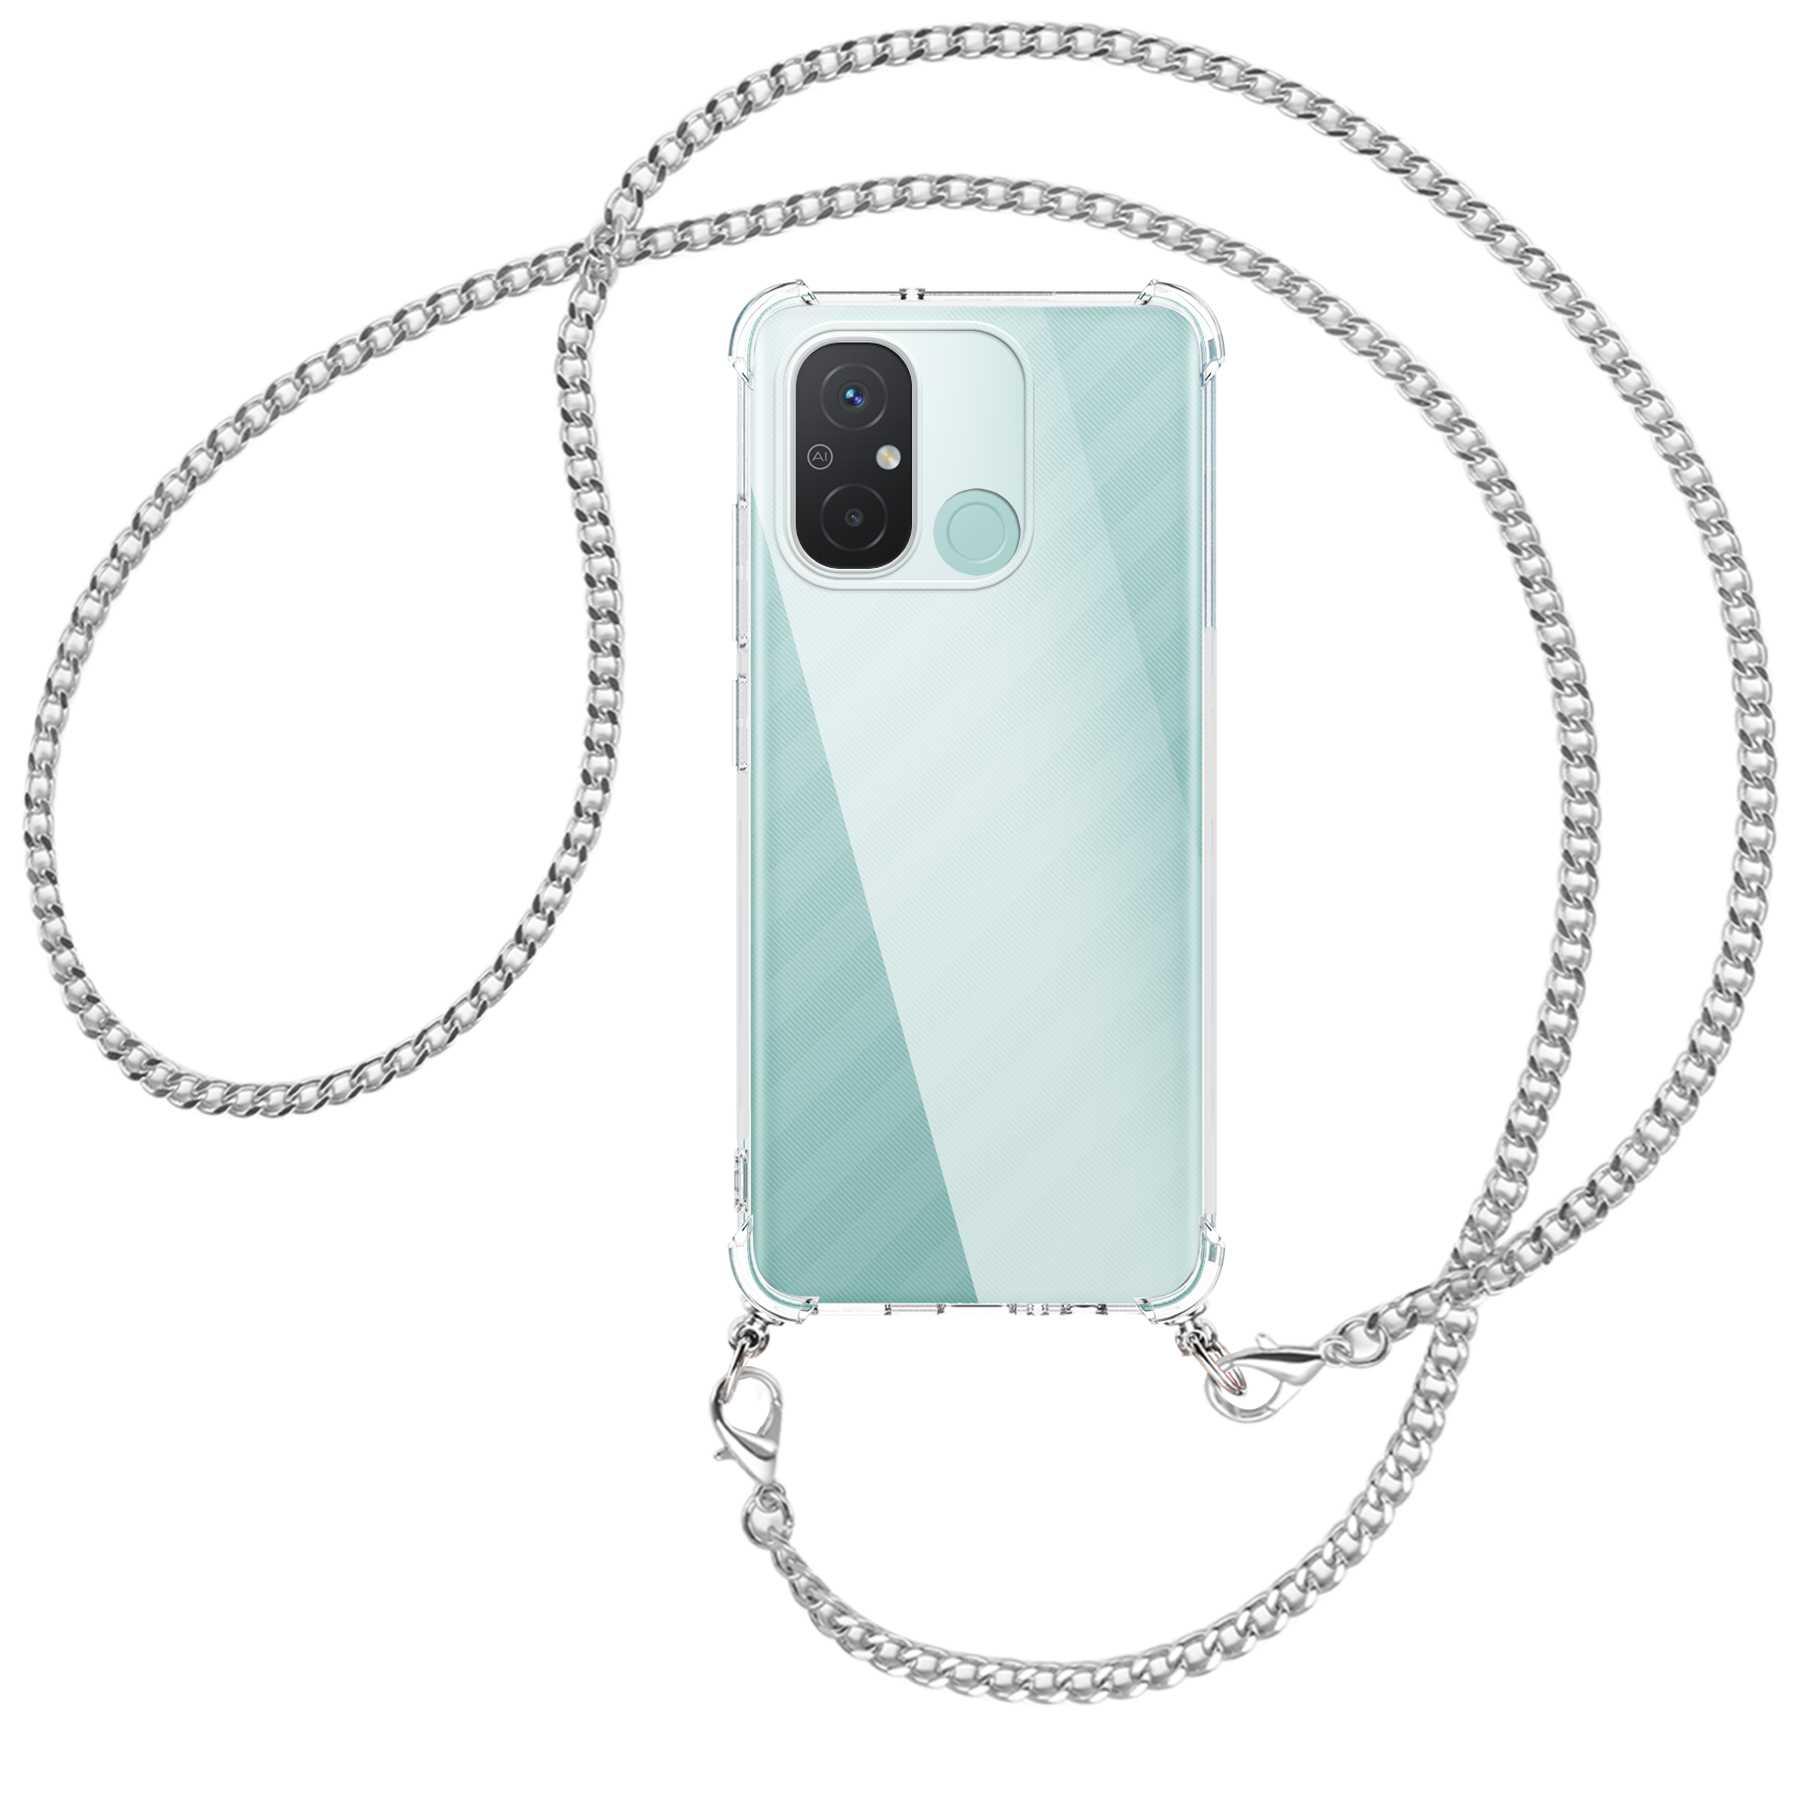 Redmi ENERGY (silber) Umhänge-Hülle Kette mit Backcover, MORE MTB Metallkette, 12C, Xiaomi,